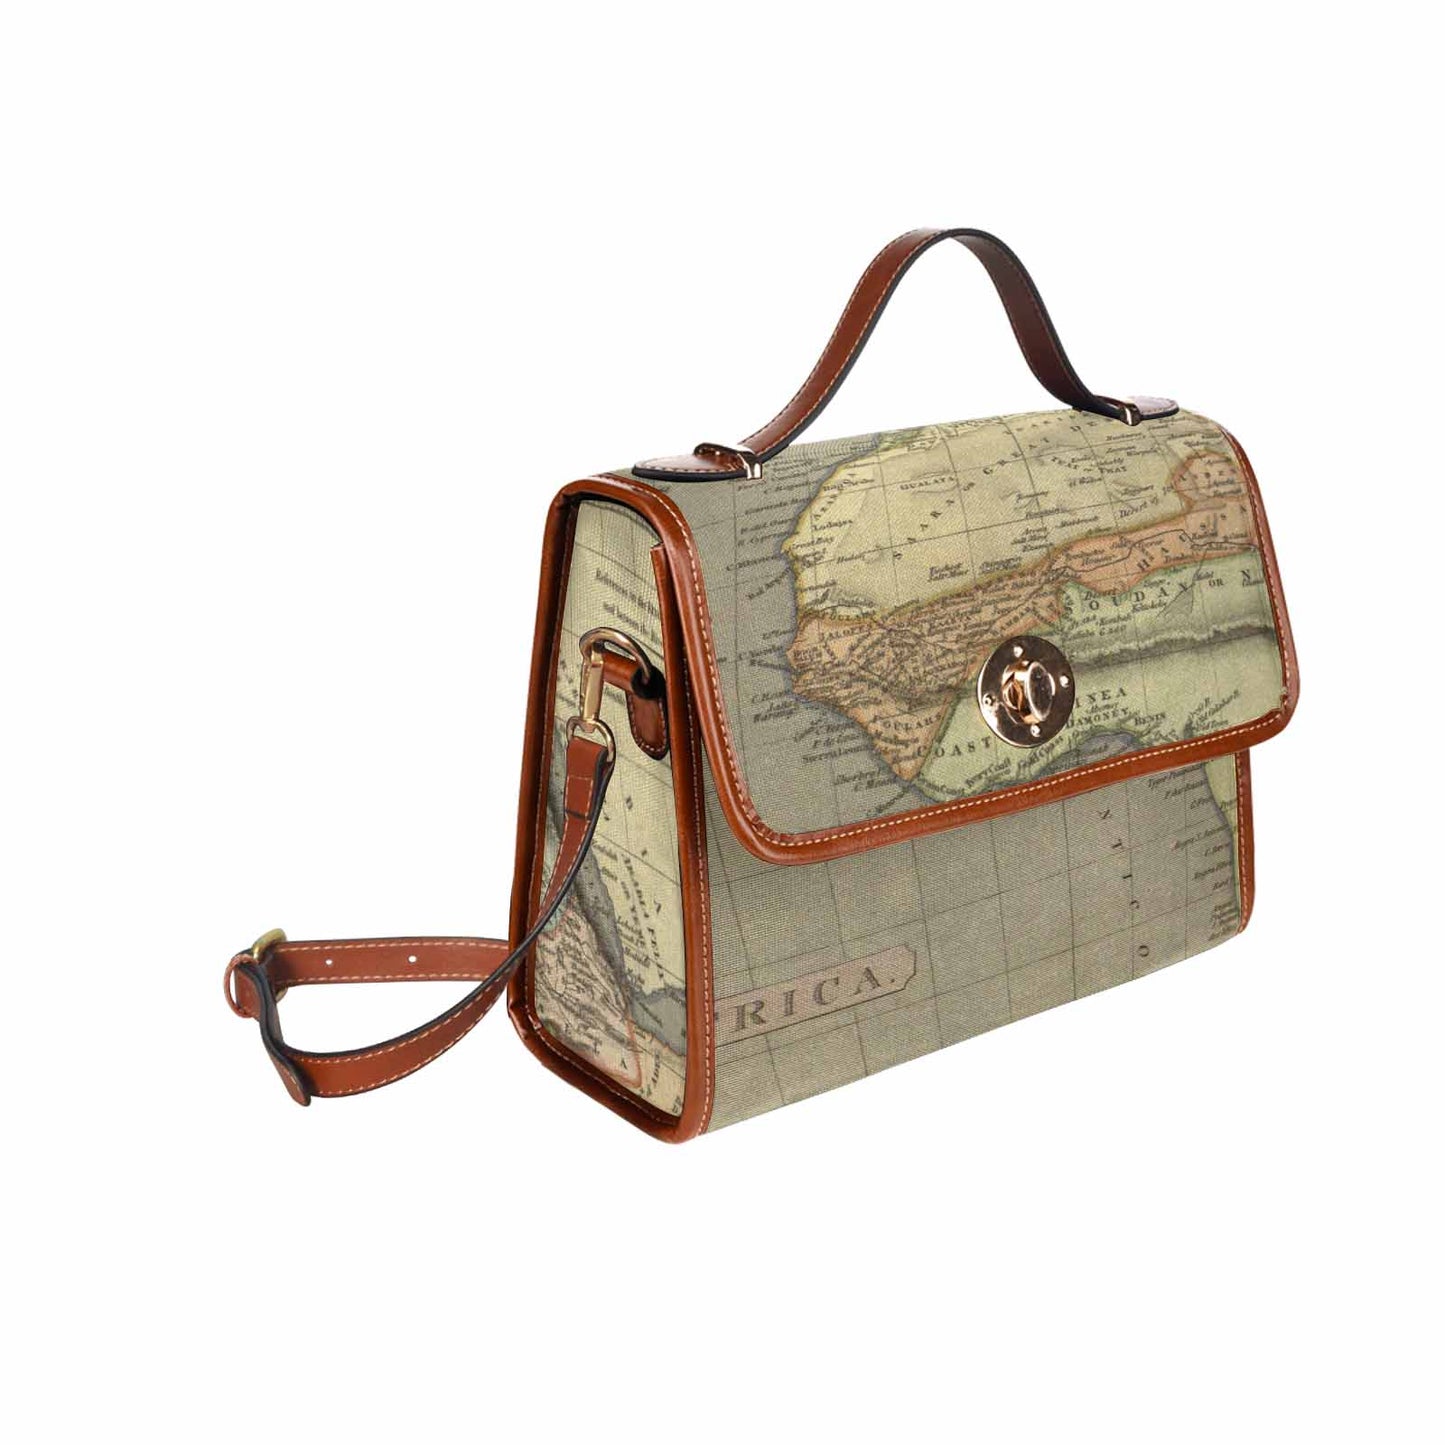 Antique Map Handbag, Model 1695341, Design 04